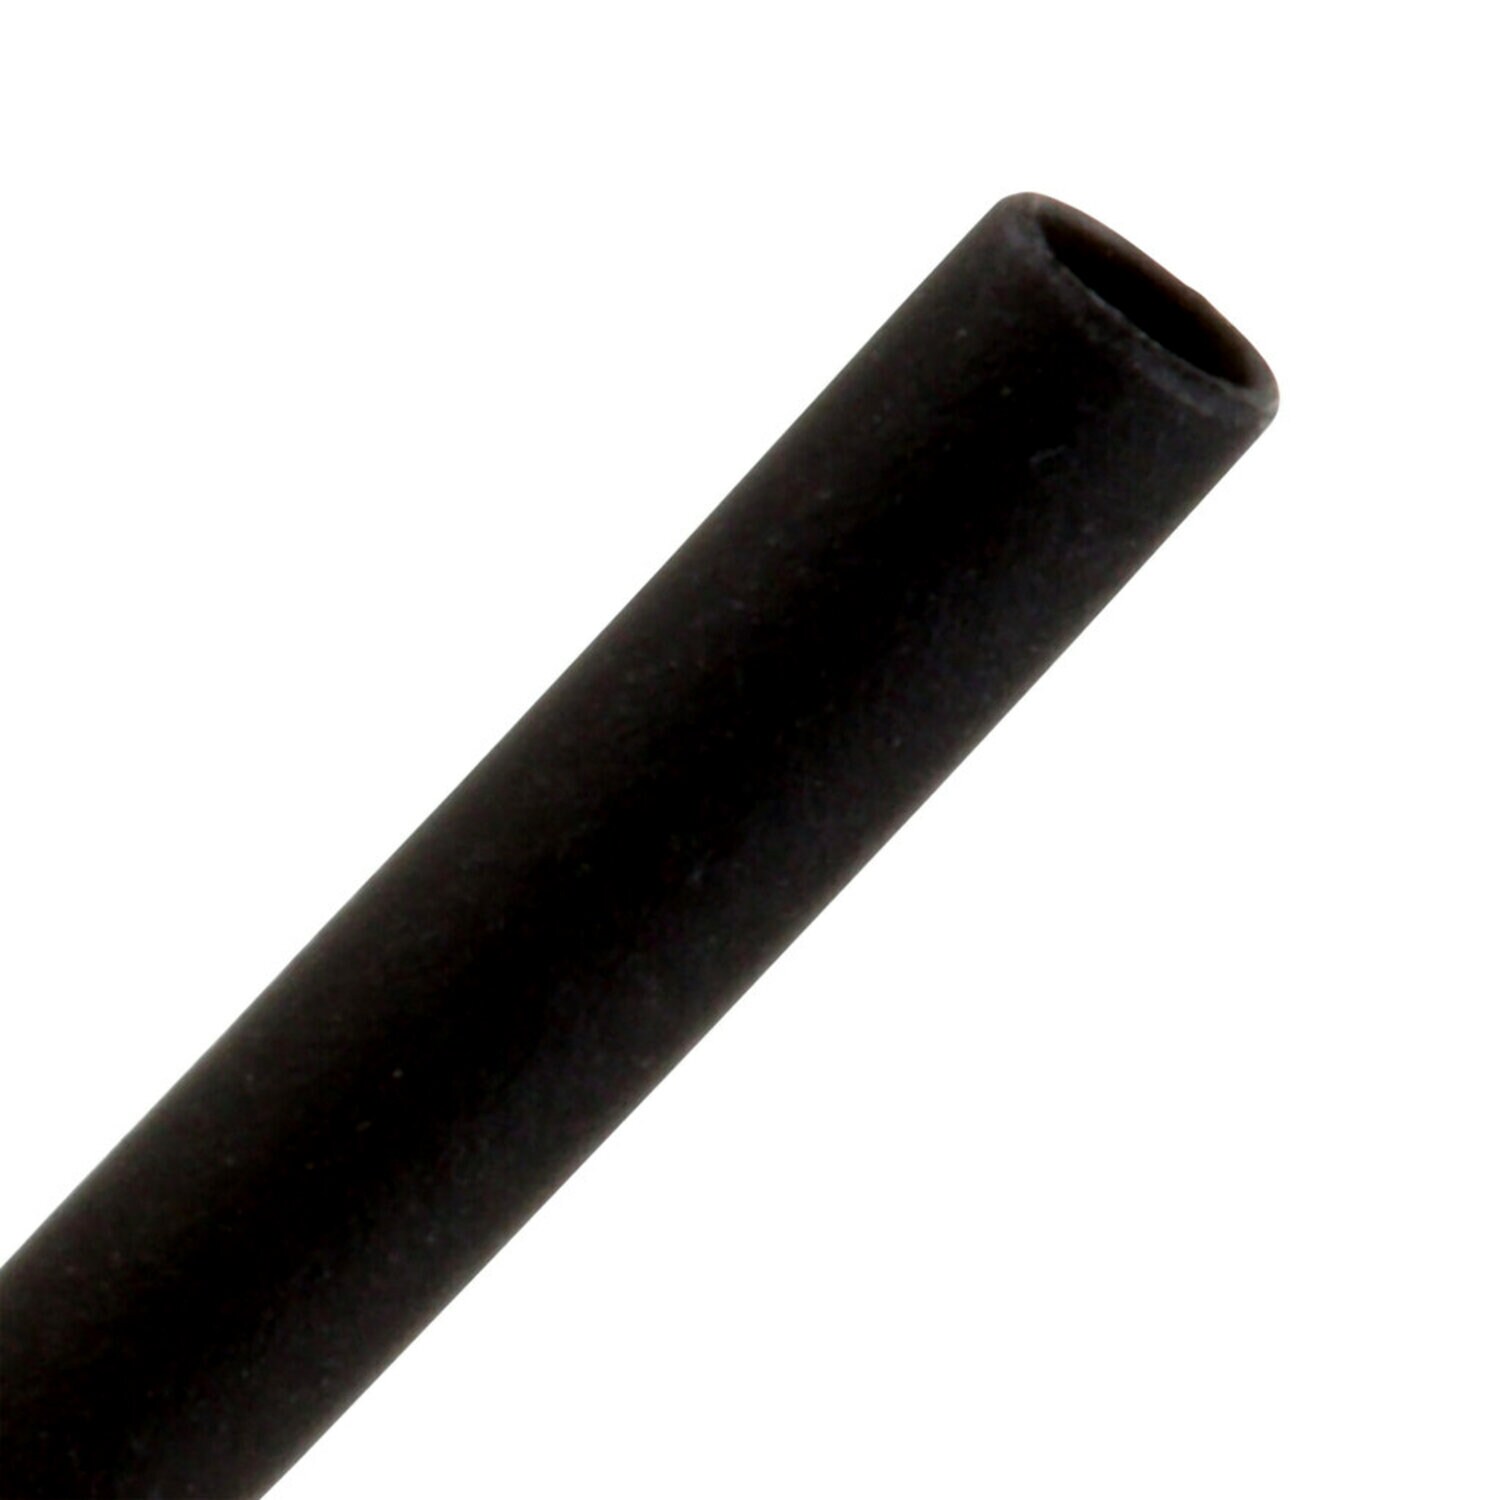 7100025179 - 3M Heat Shrink Thin-Wall Tubing FP-301-1/16-Black-100', 100 ft Length
spool, 300 ft/case